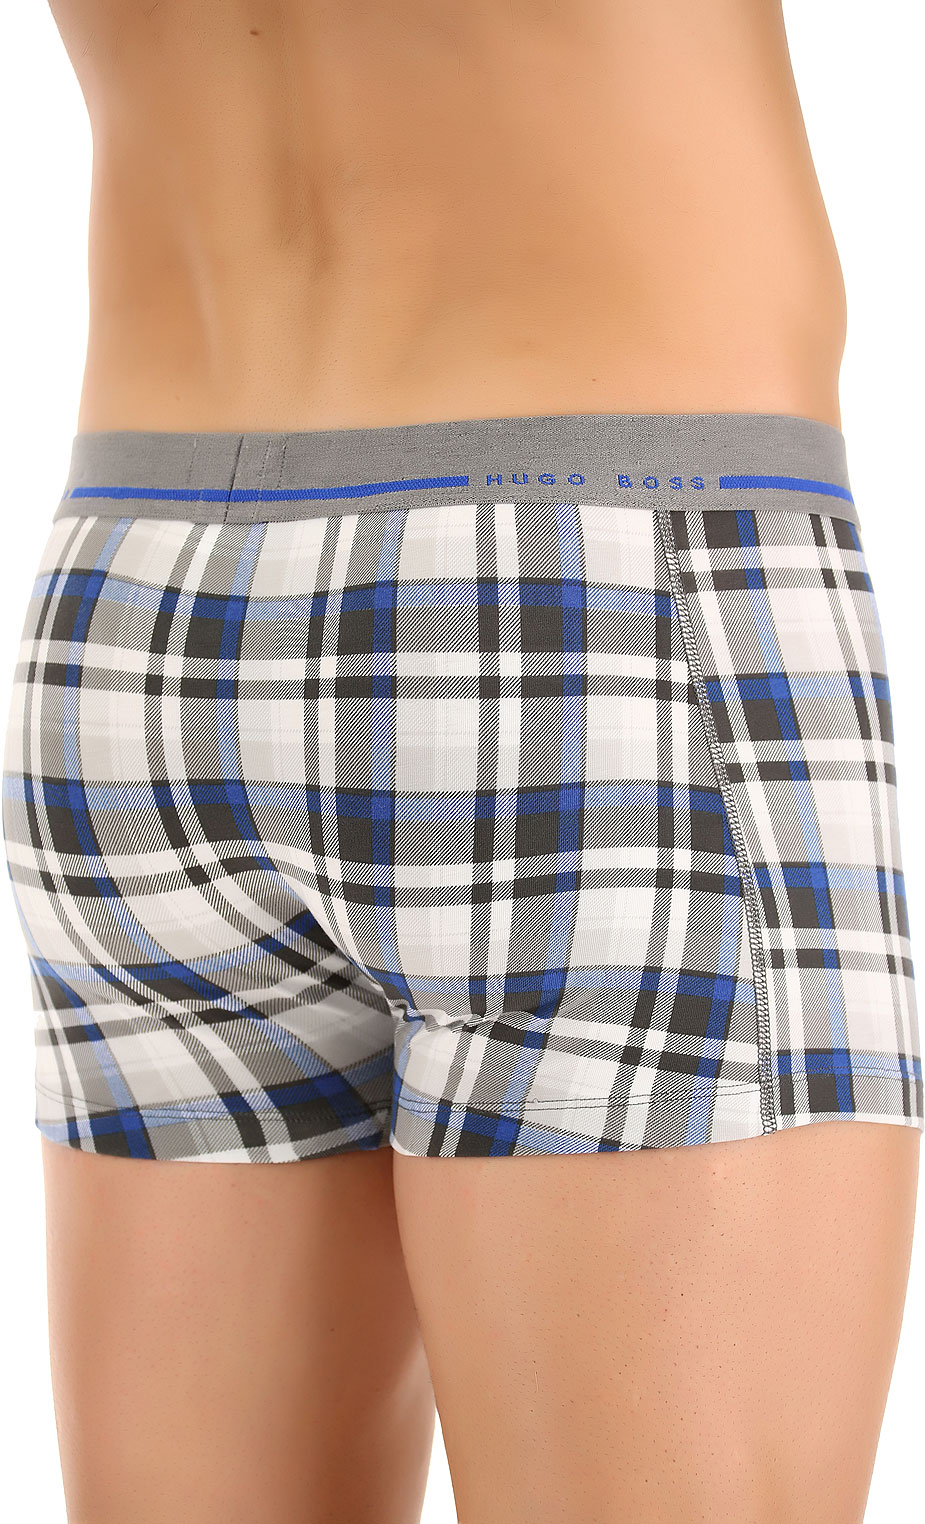 Mens Underwear Hugo Boss, Style code: 50271642-10161406-461